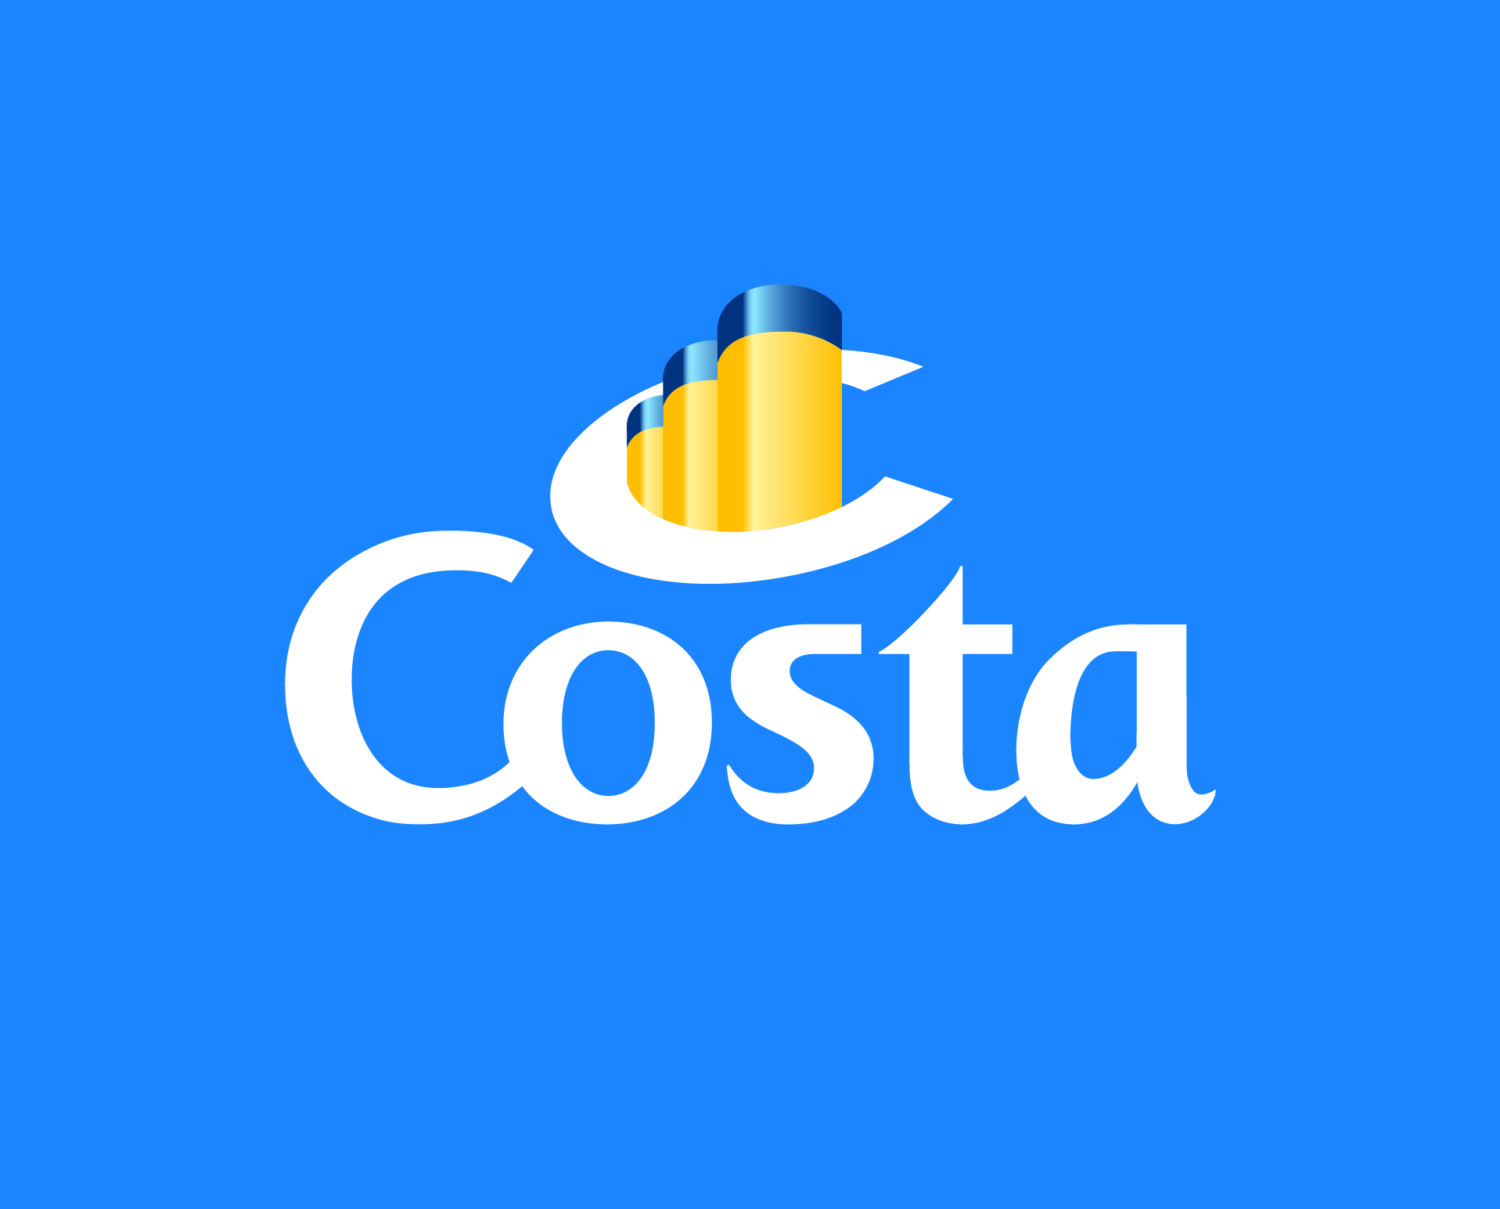 Costa Crociere ändert Reiserouten in Italien